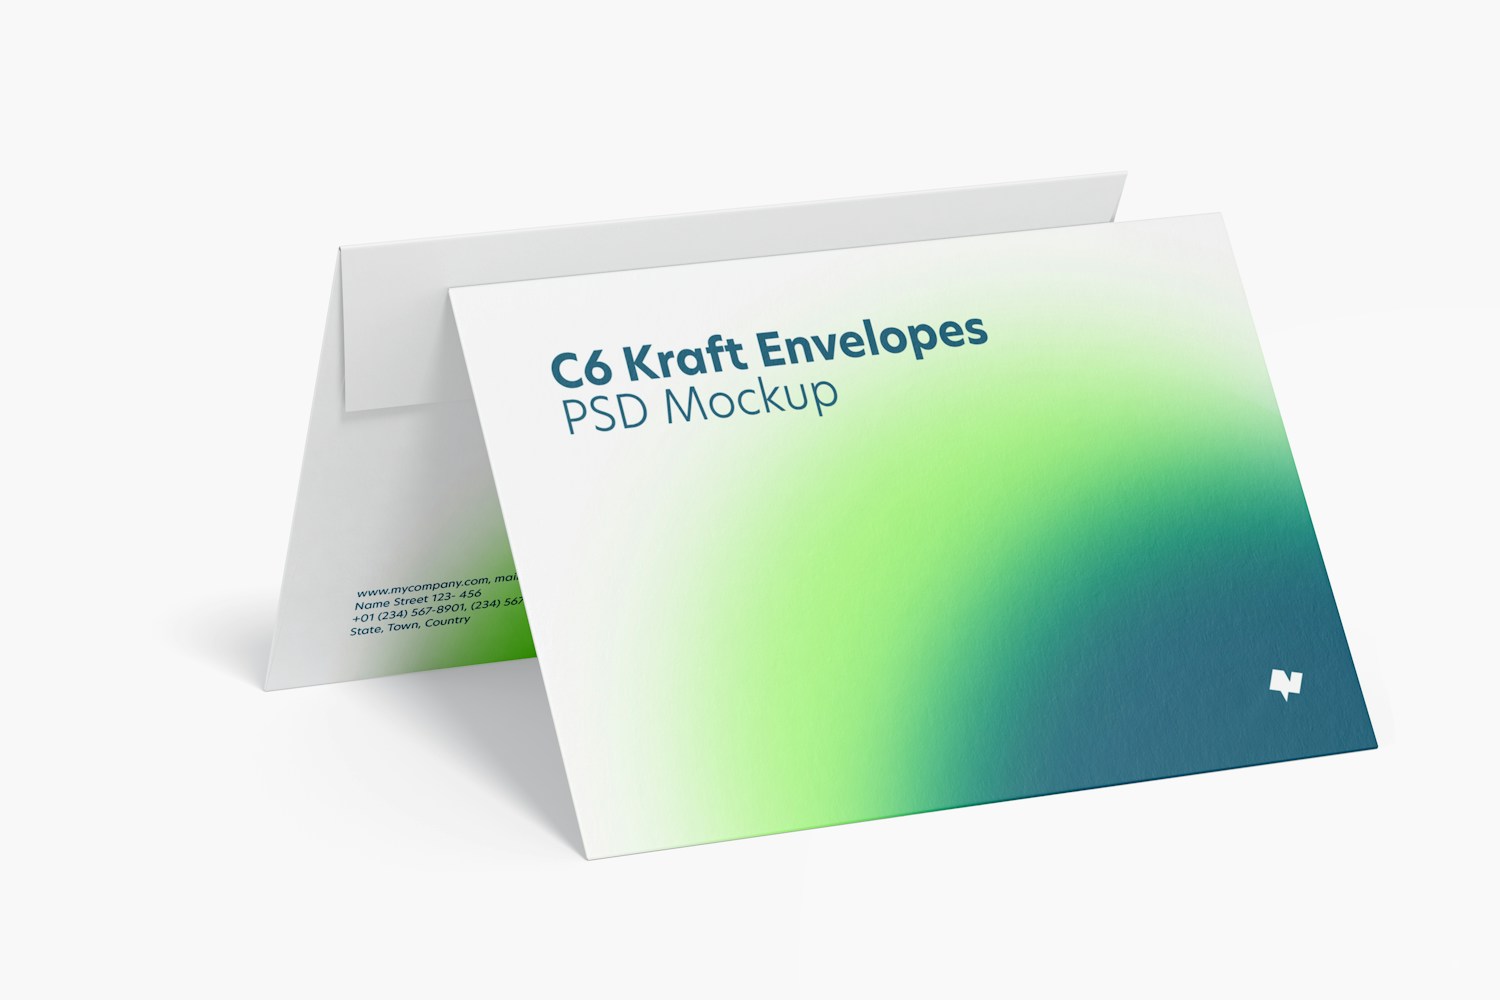 C6 Kraft Envelopes Mockup, Right View